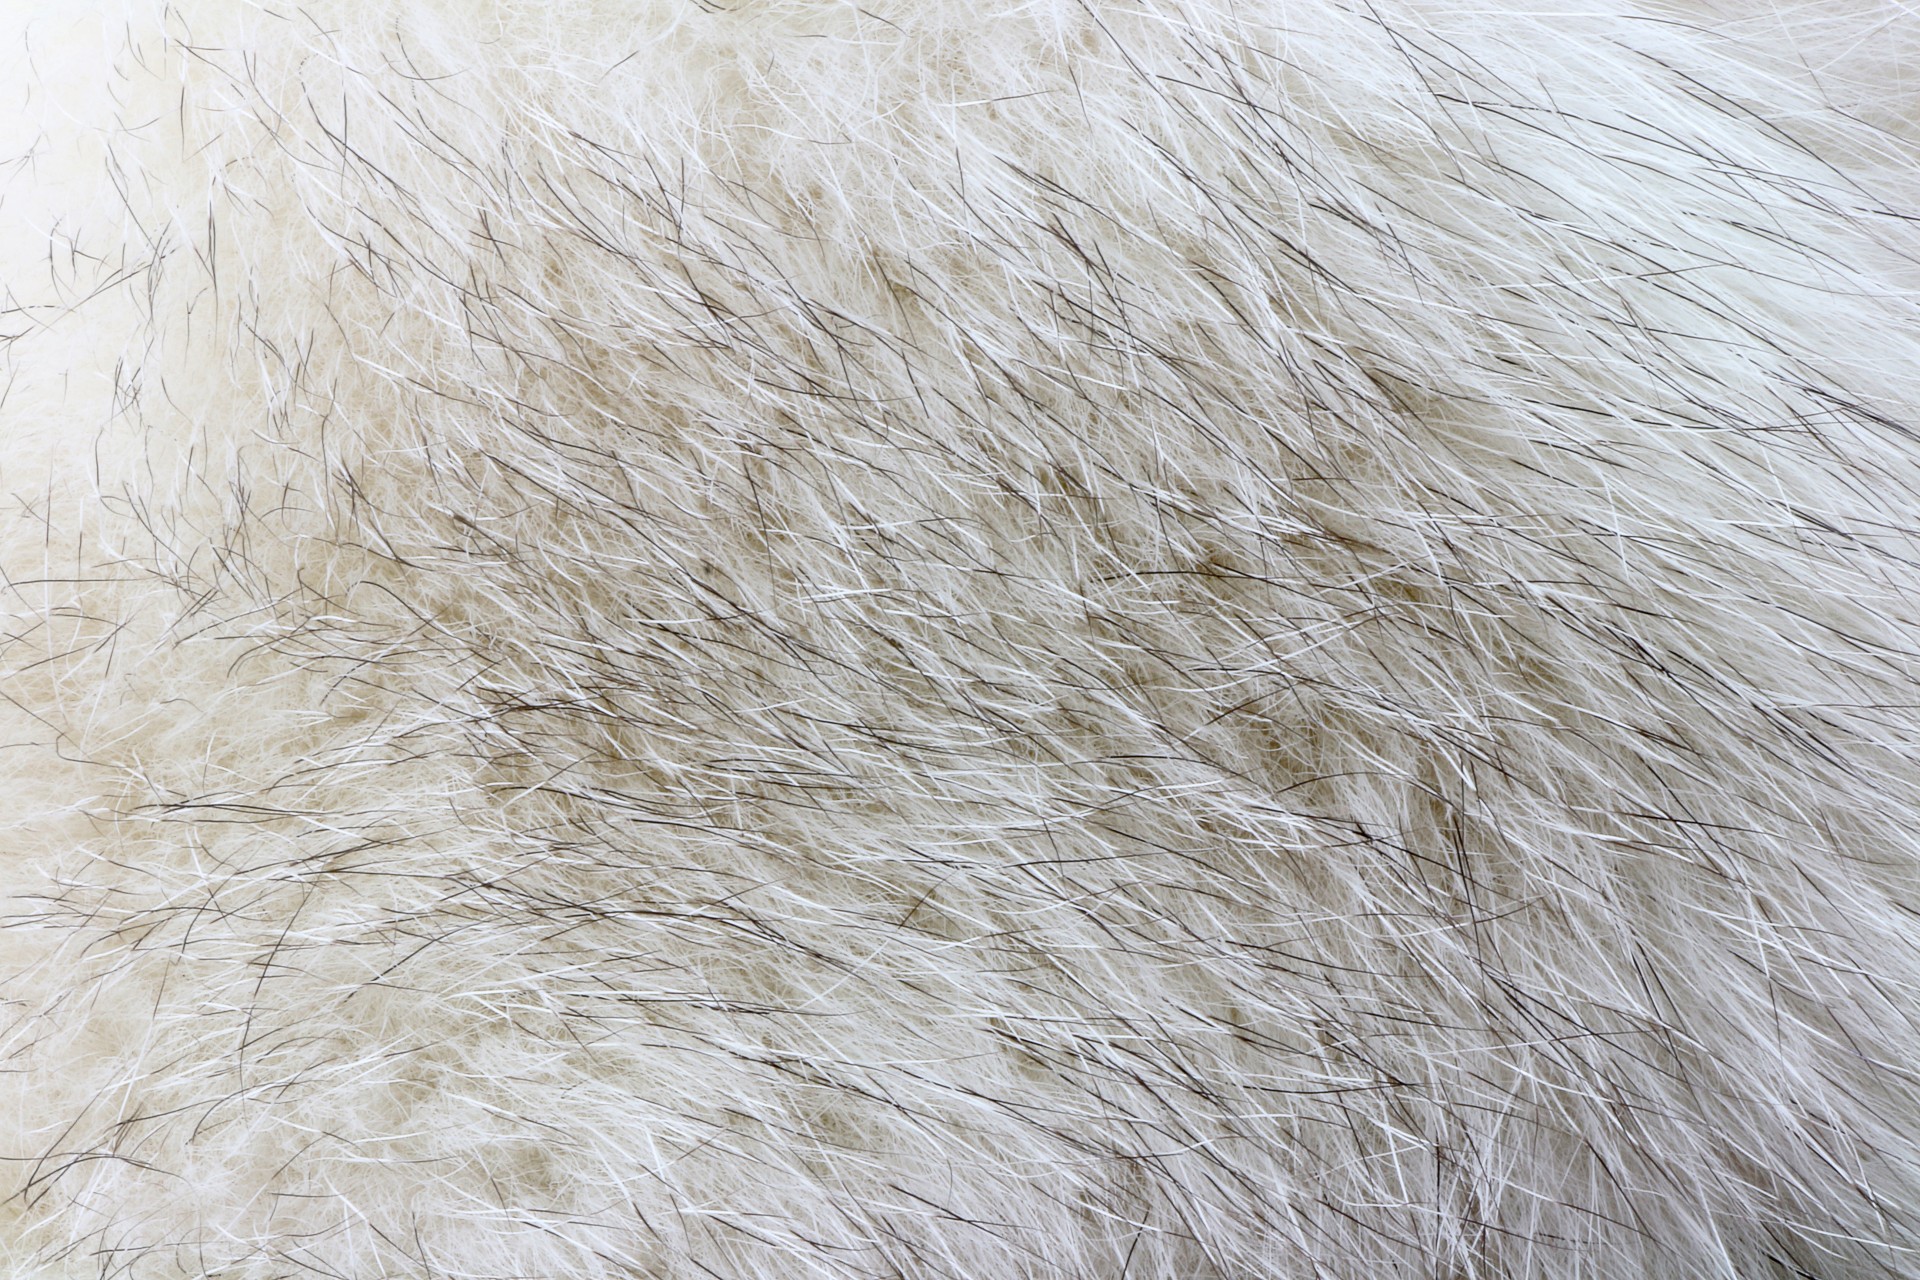 soft-fur-texture-1-free-stock-photo-public-domain-pictures